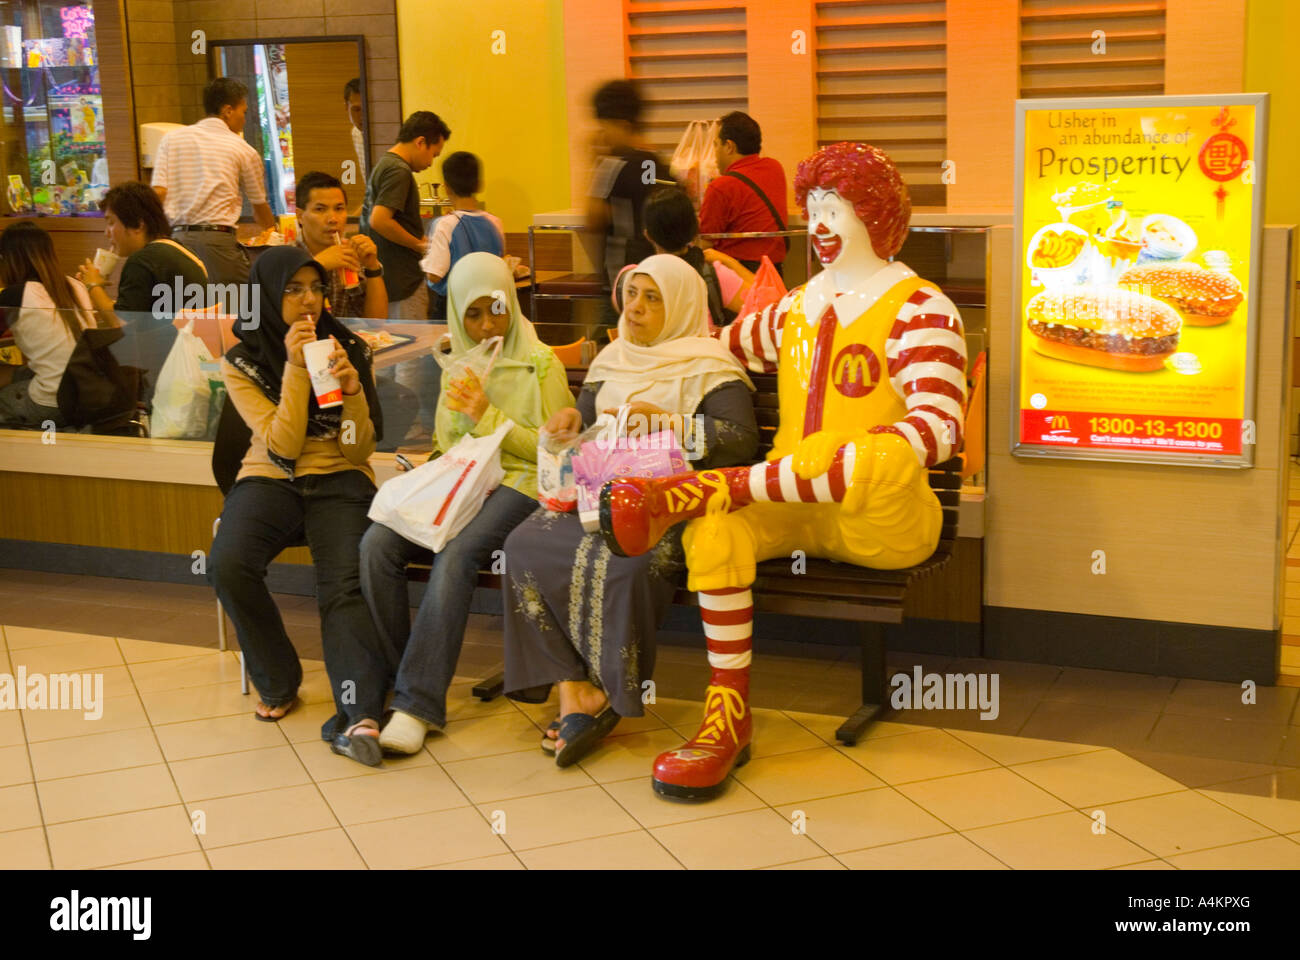 Muslim women and Ronald McDonald clown in a shopping mall in Malaysia Stock Photo